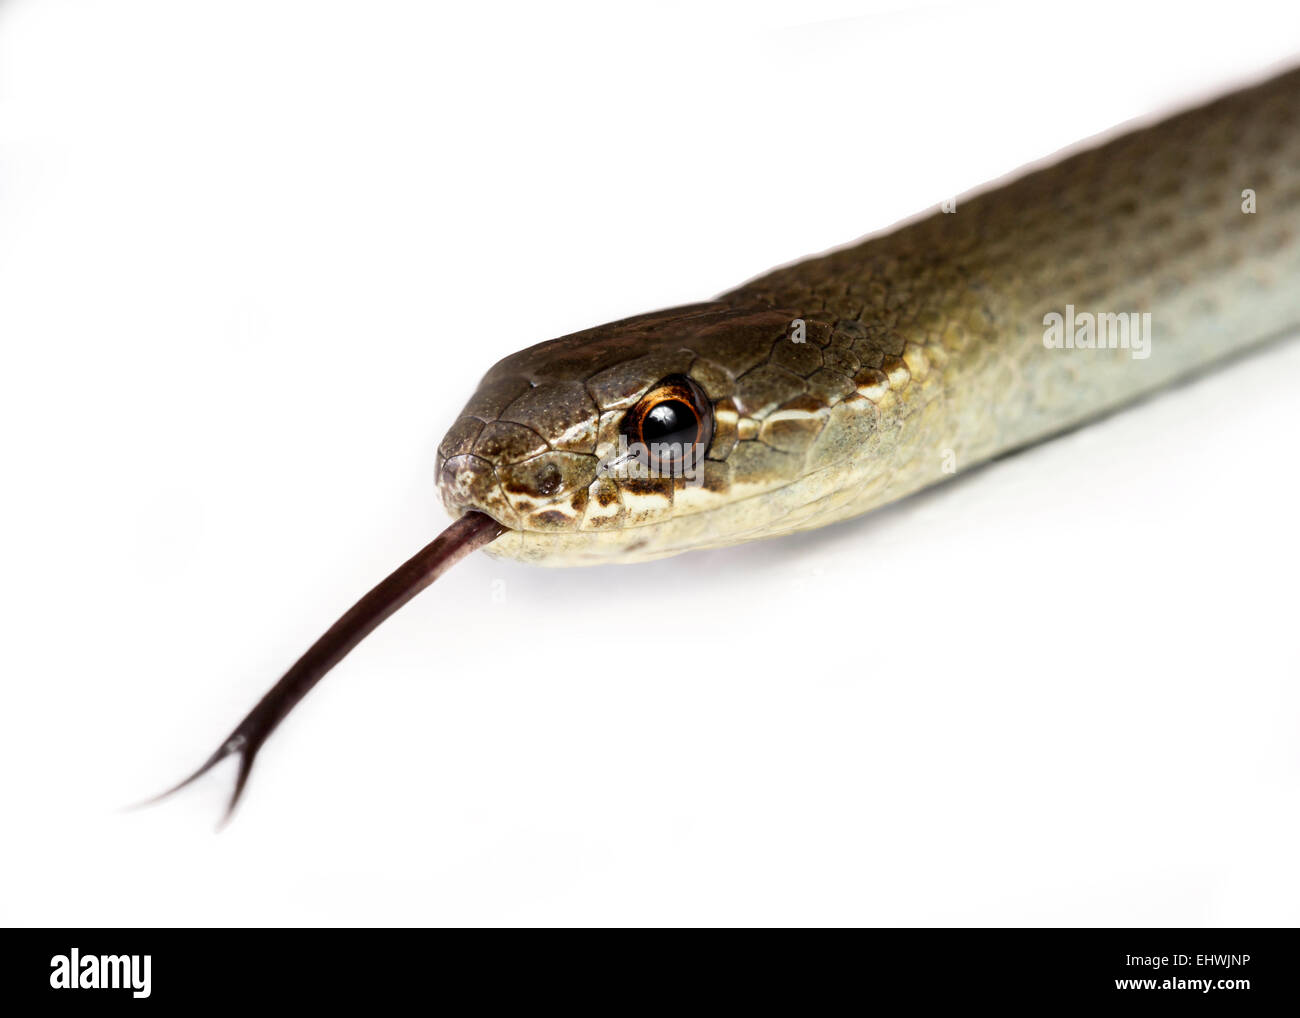 Un gros plan d'un serpent (Hemiaspis mars signata) sur un fond blanc, avec la langue qui sort Banque D'Images